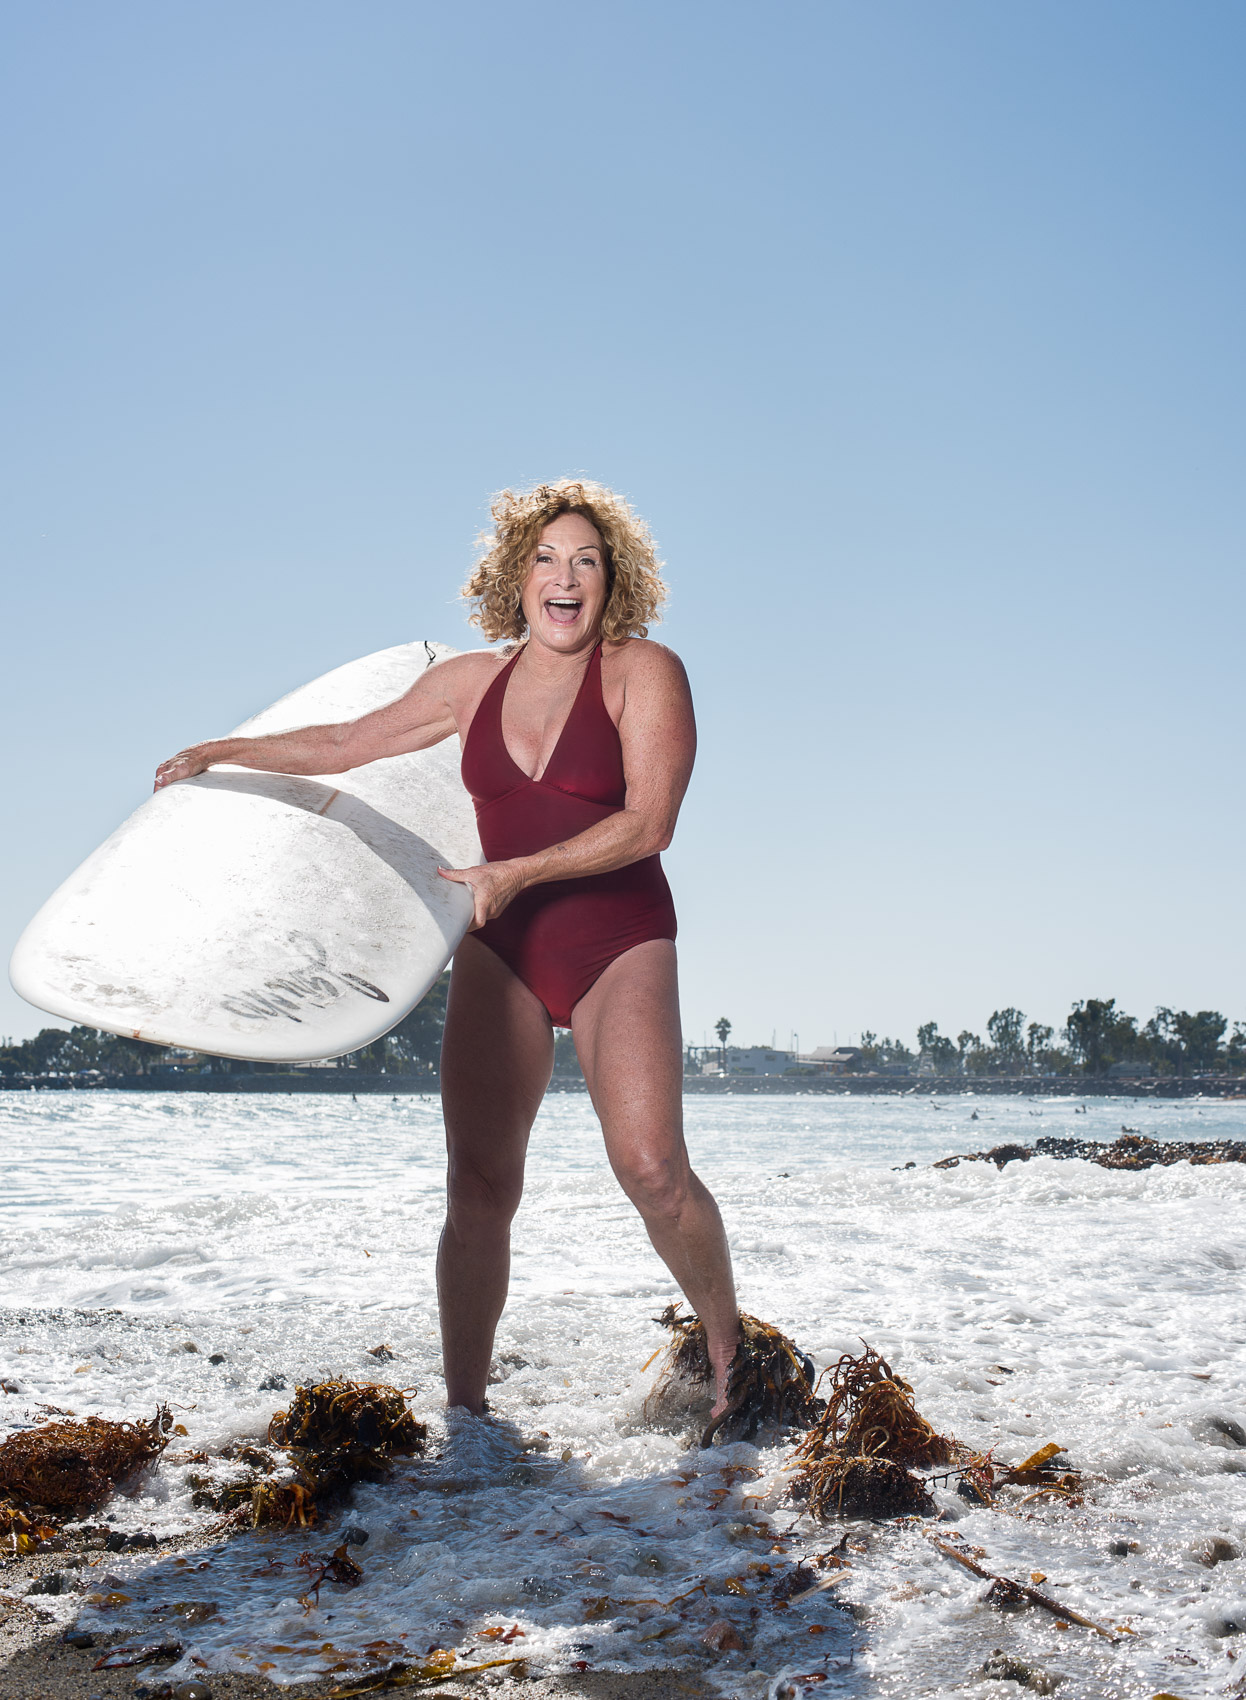 Senior surfer big wave surfing champion woman portrait in Doheny 